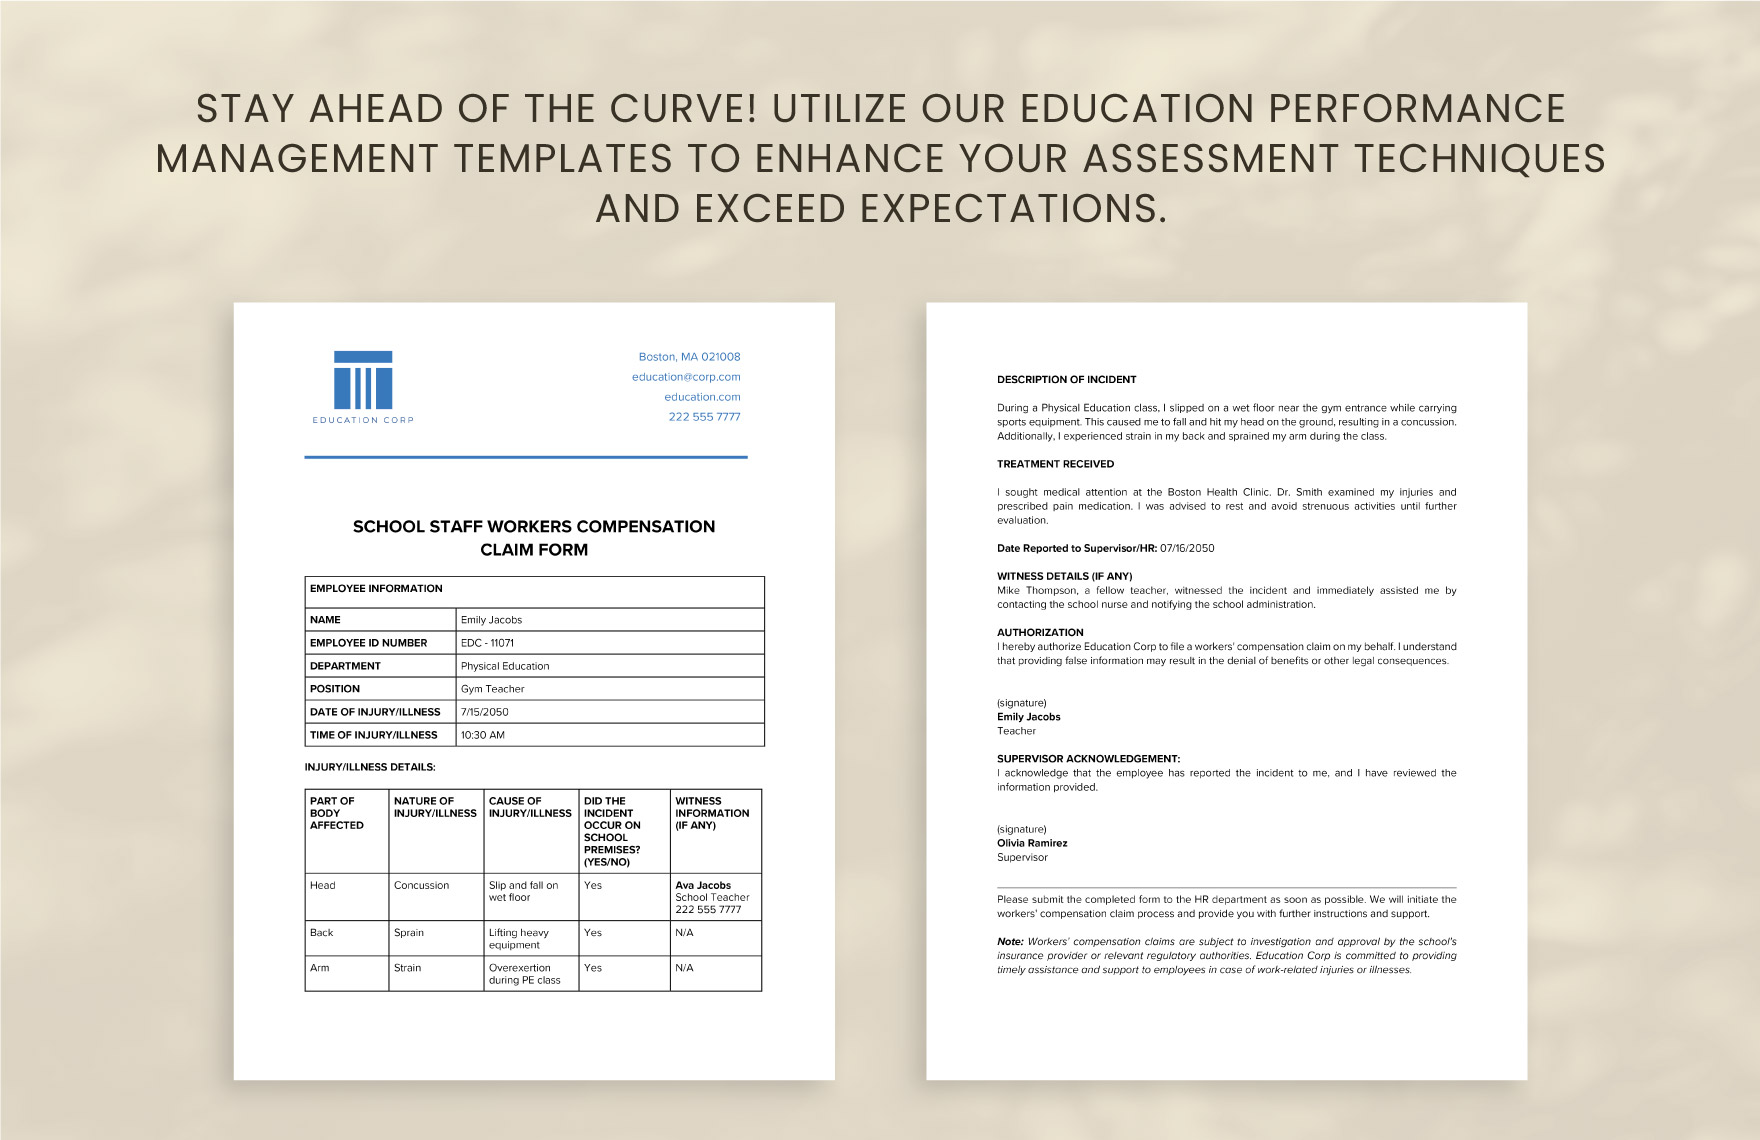 School Staff Performance Evaluation Form Template